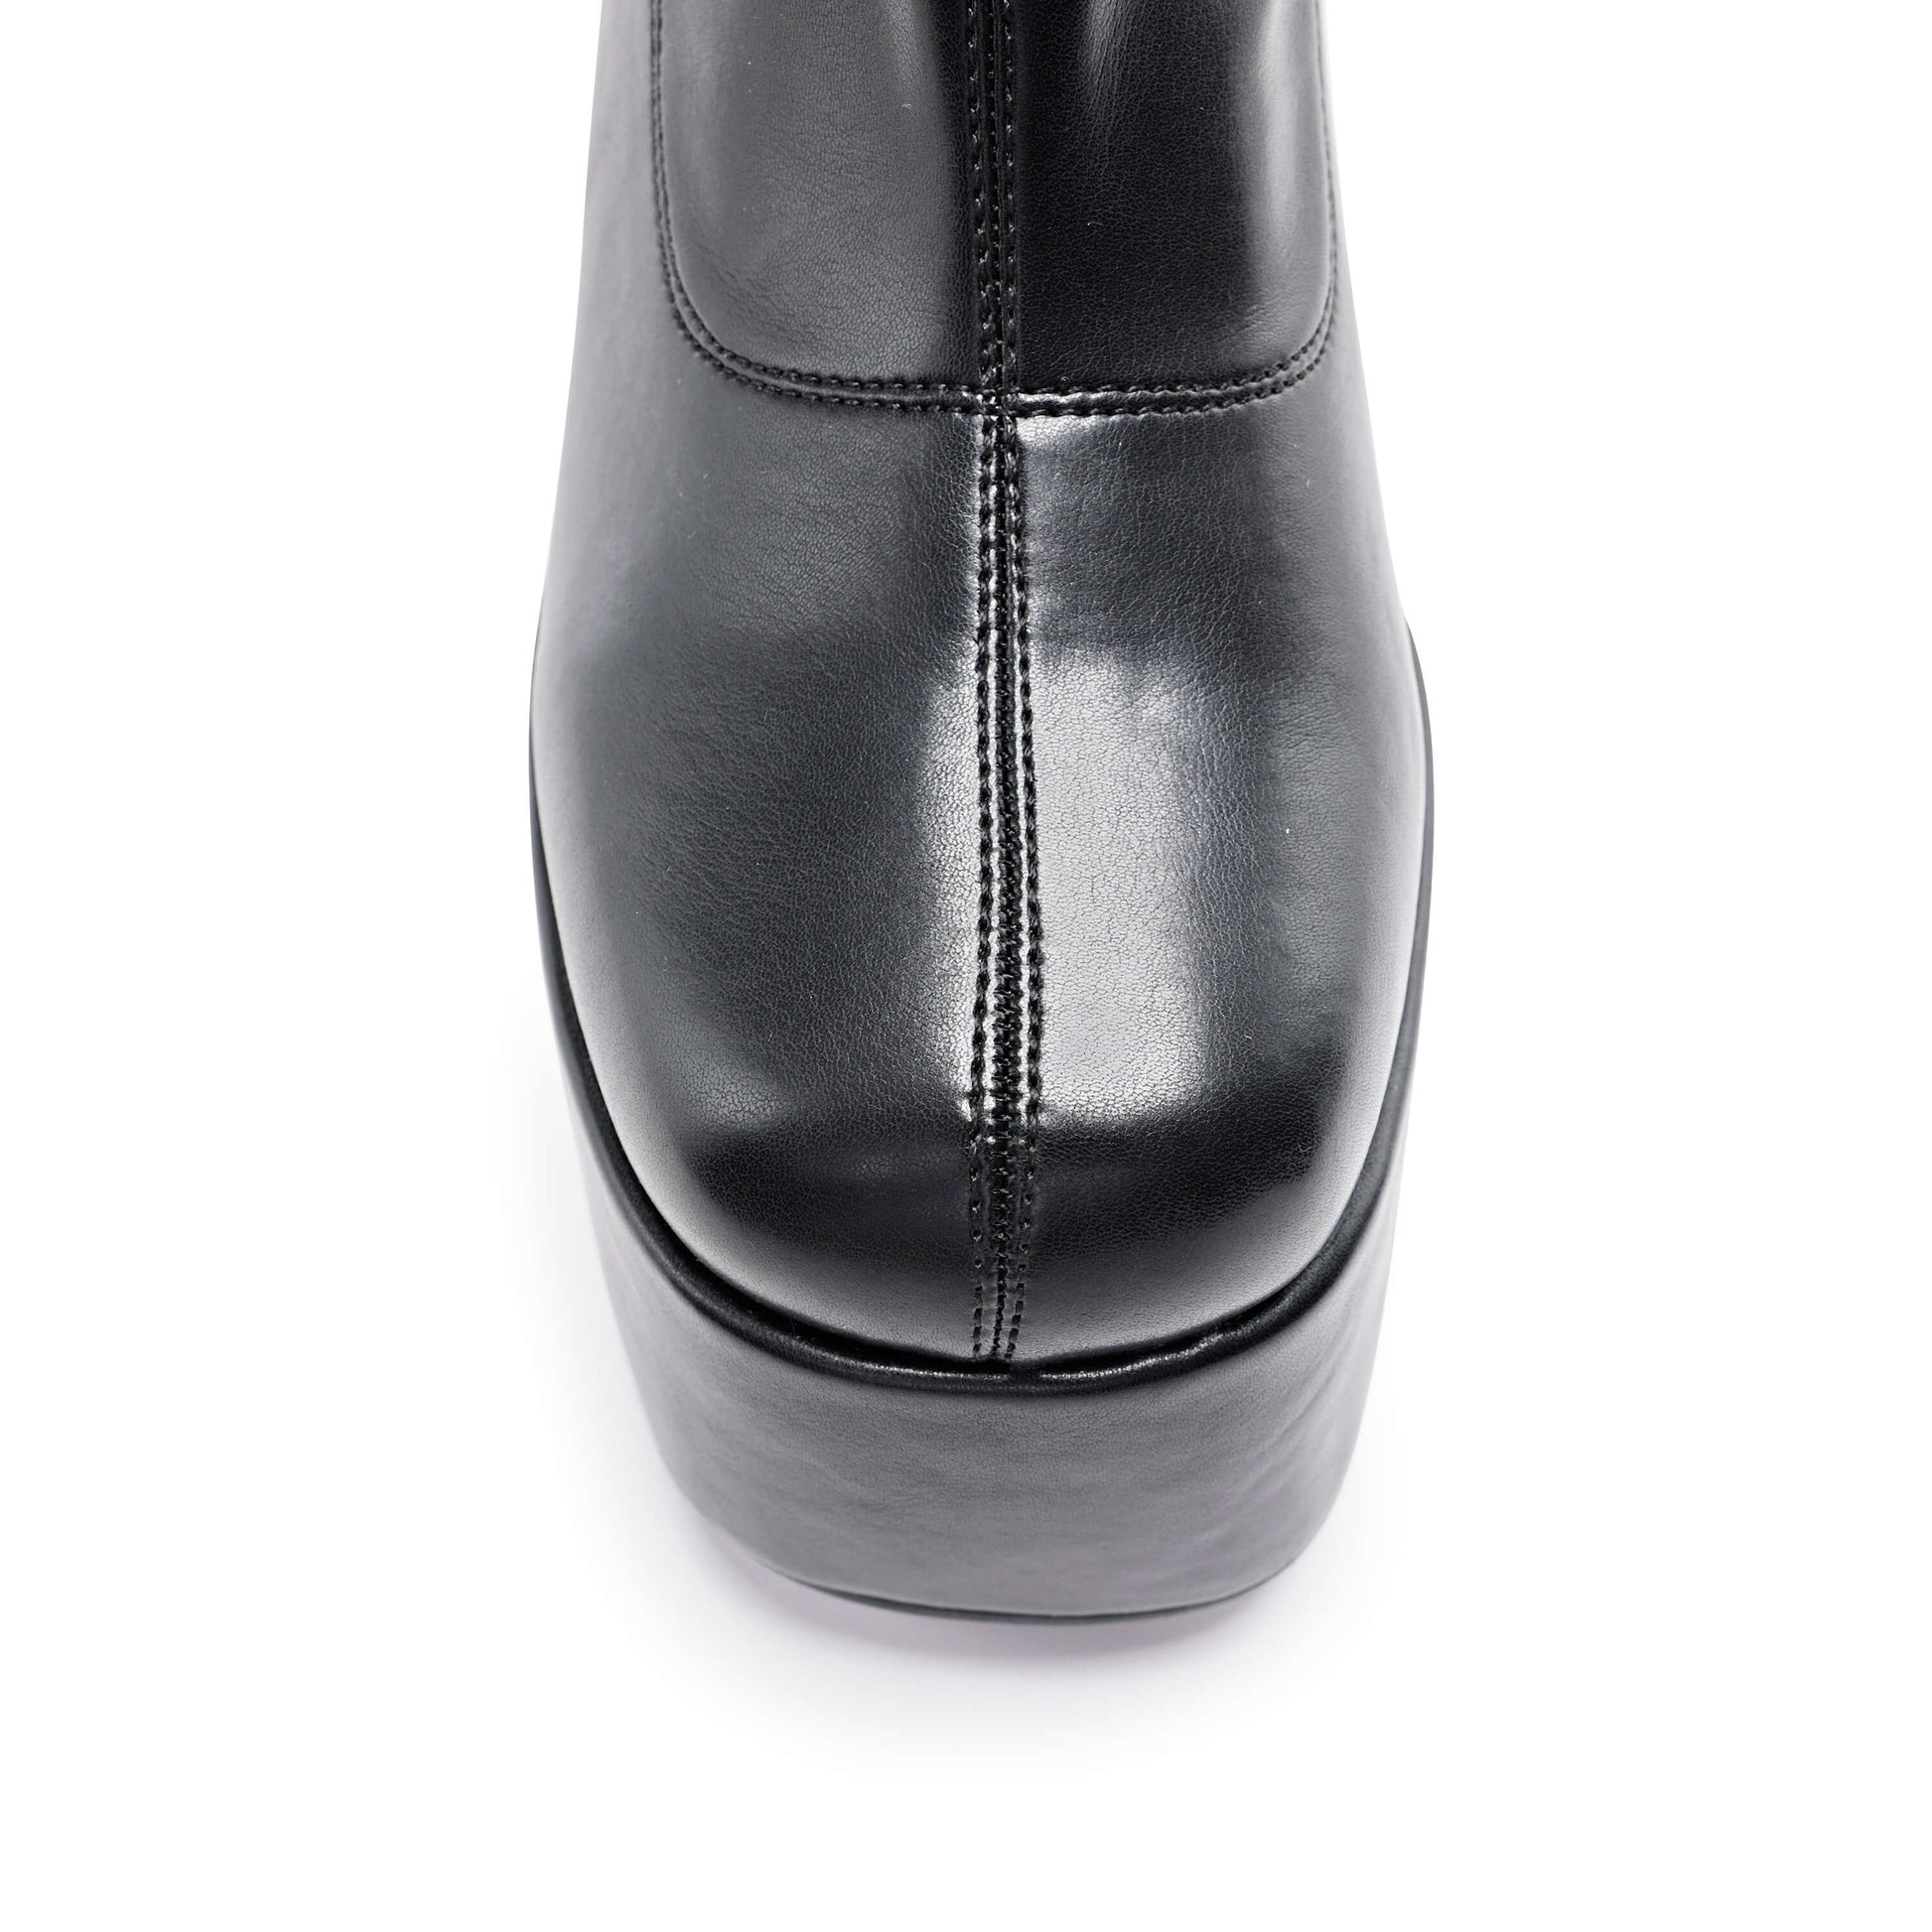 Delano Men's Black Platform Heeled Boots - Ankle Boots - KOI Footwear - Black - Top View